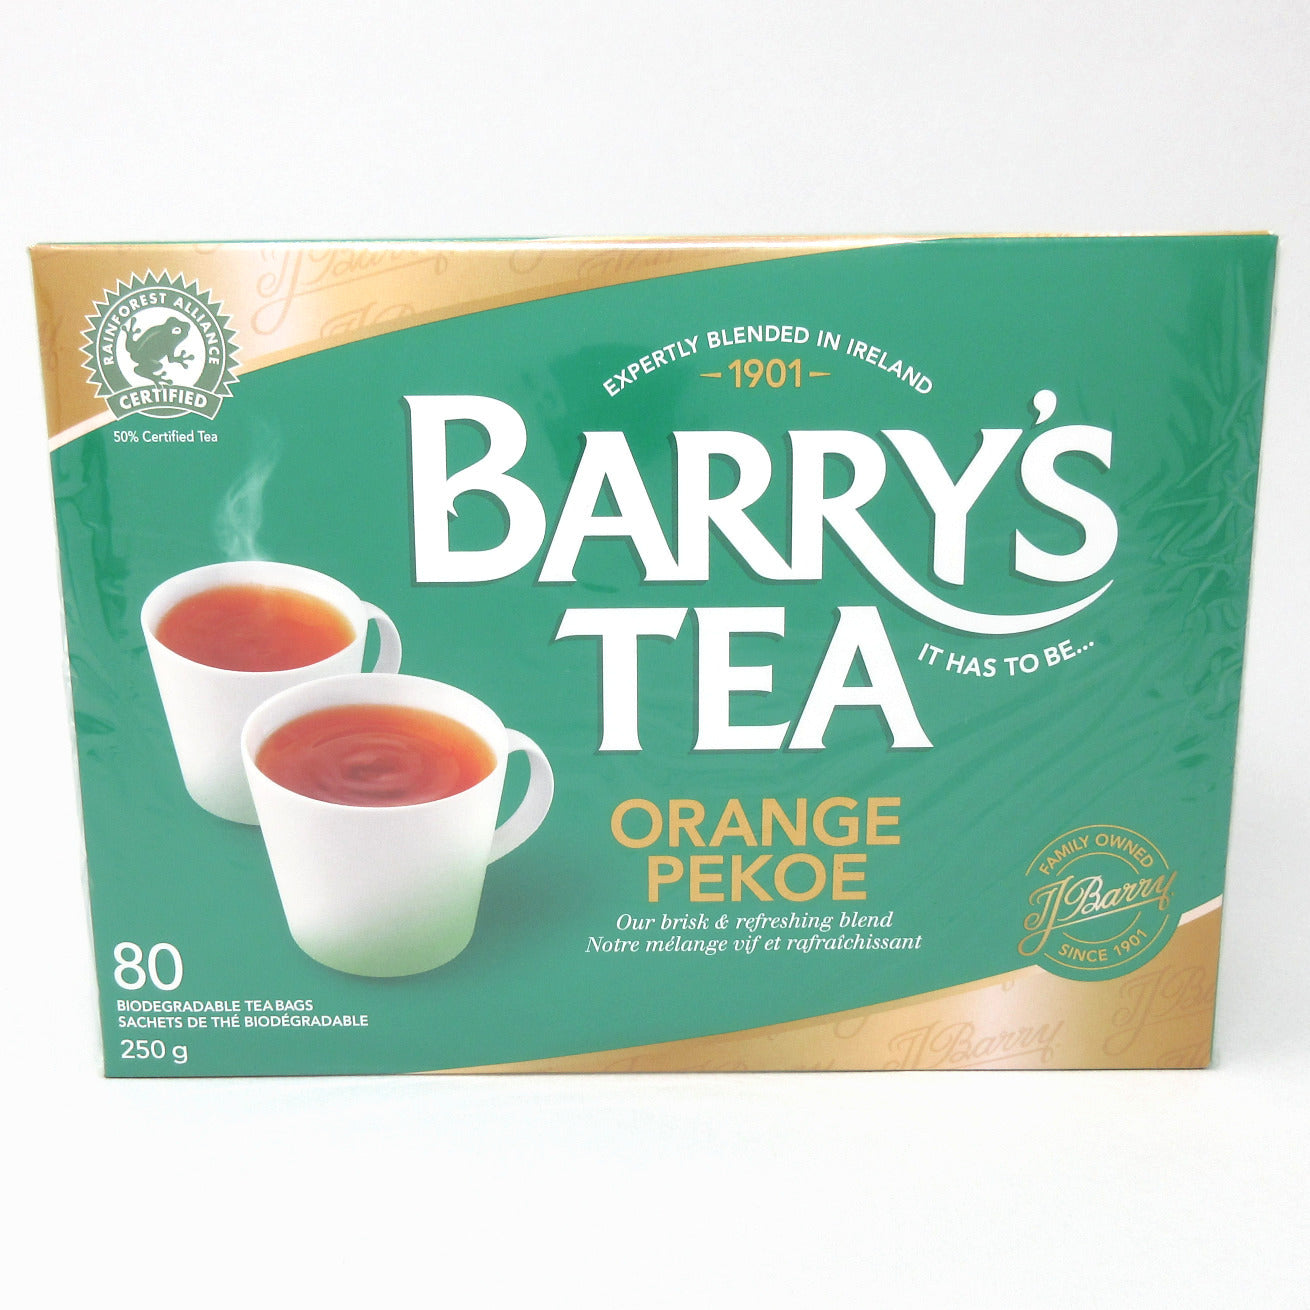 Flour Barrel product image - Barry's Tea Orange Pekoe